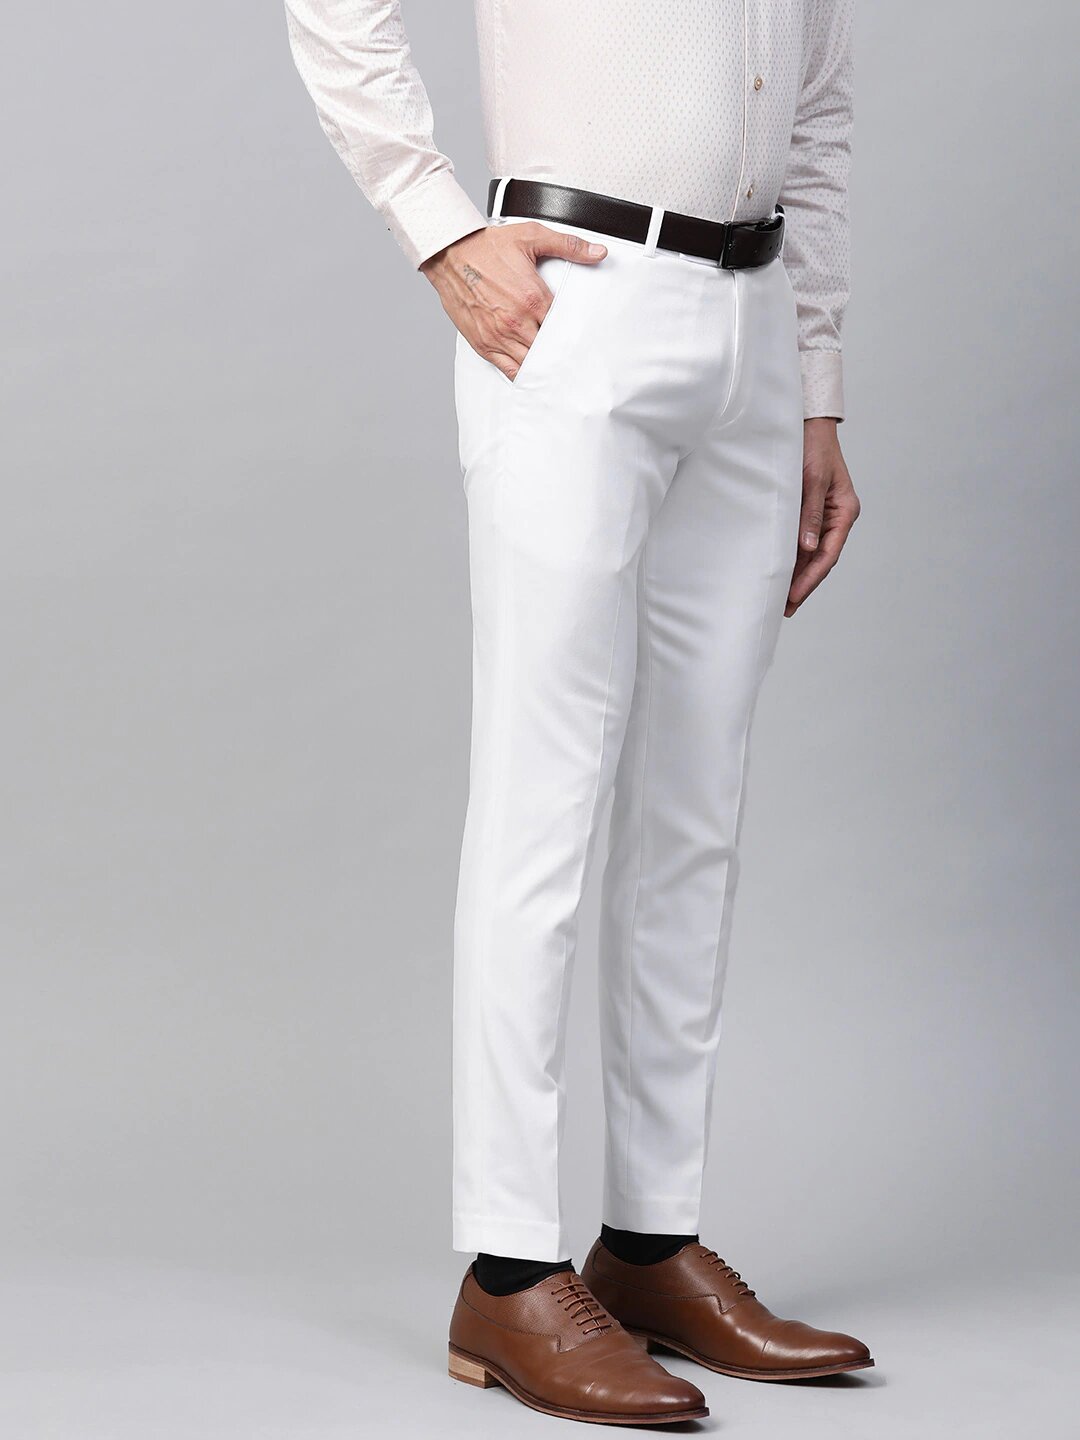 Abelino  Mens Linen Trousers  White Trousers for Men  Yellwithus  Yell   Unisexx Fashion House